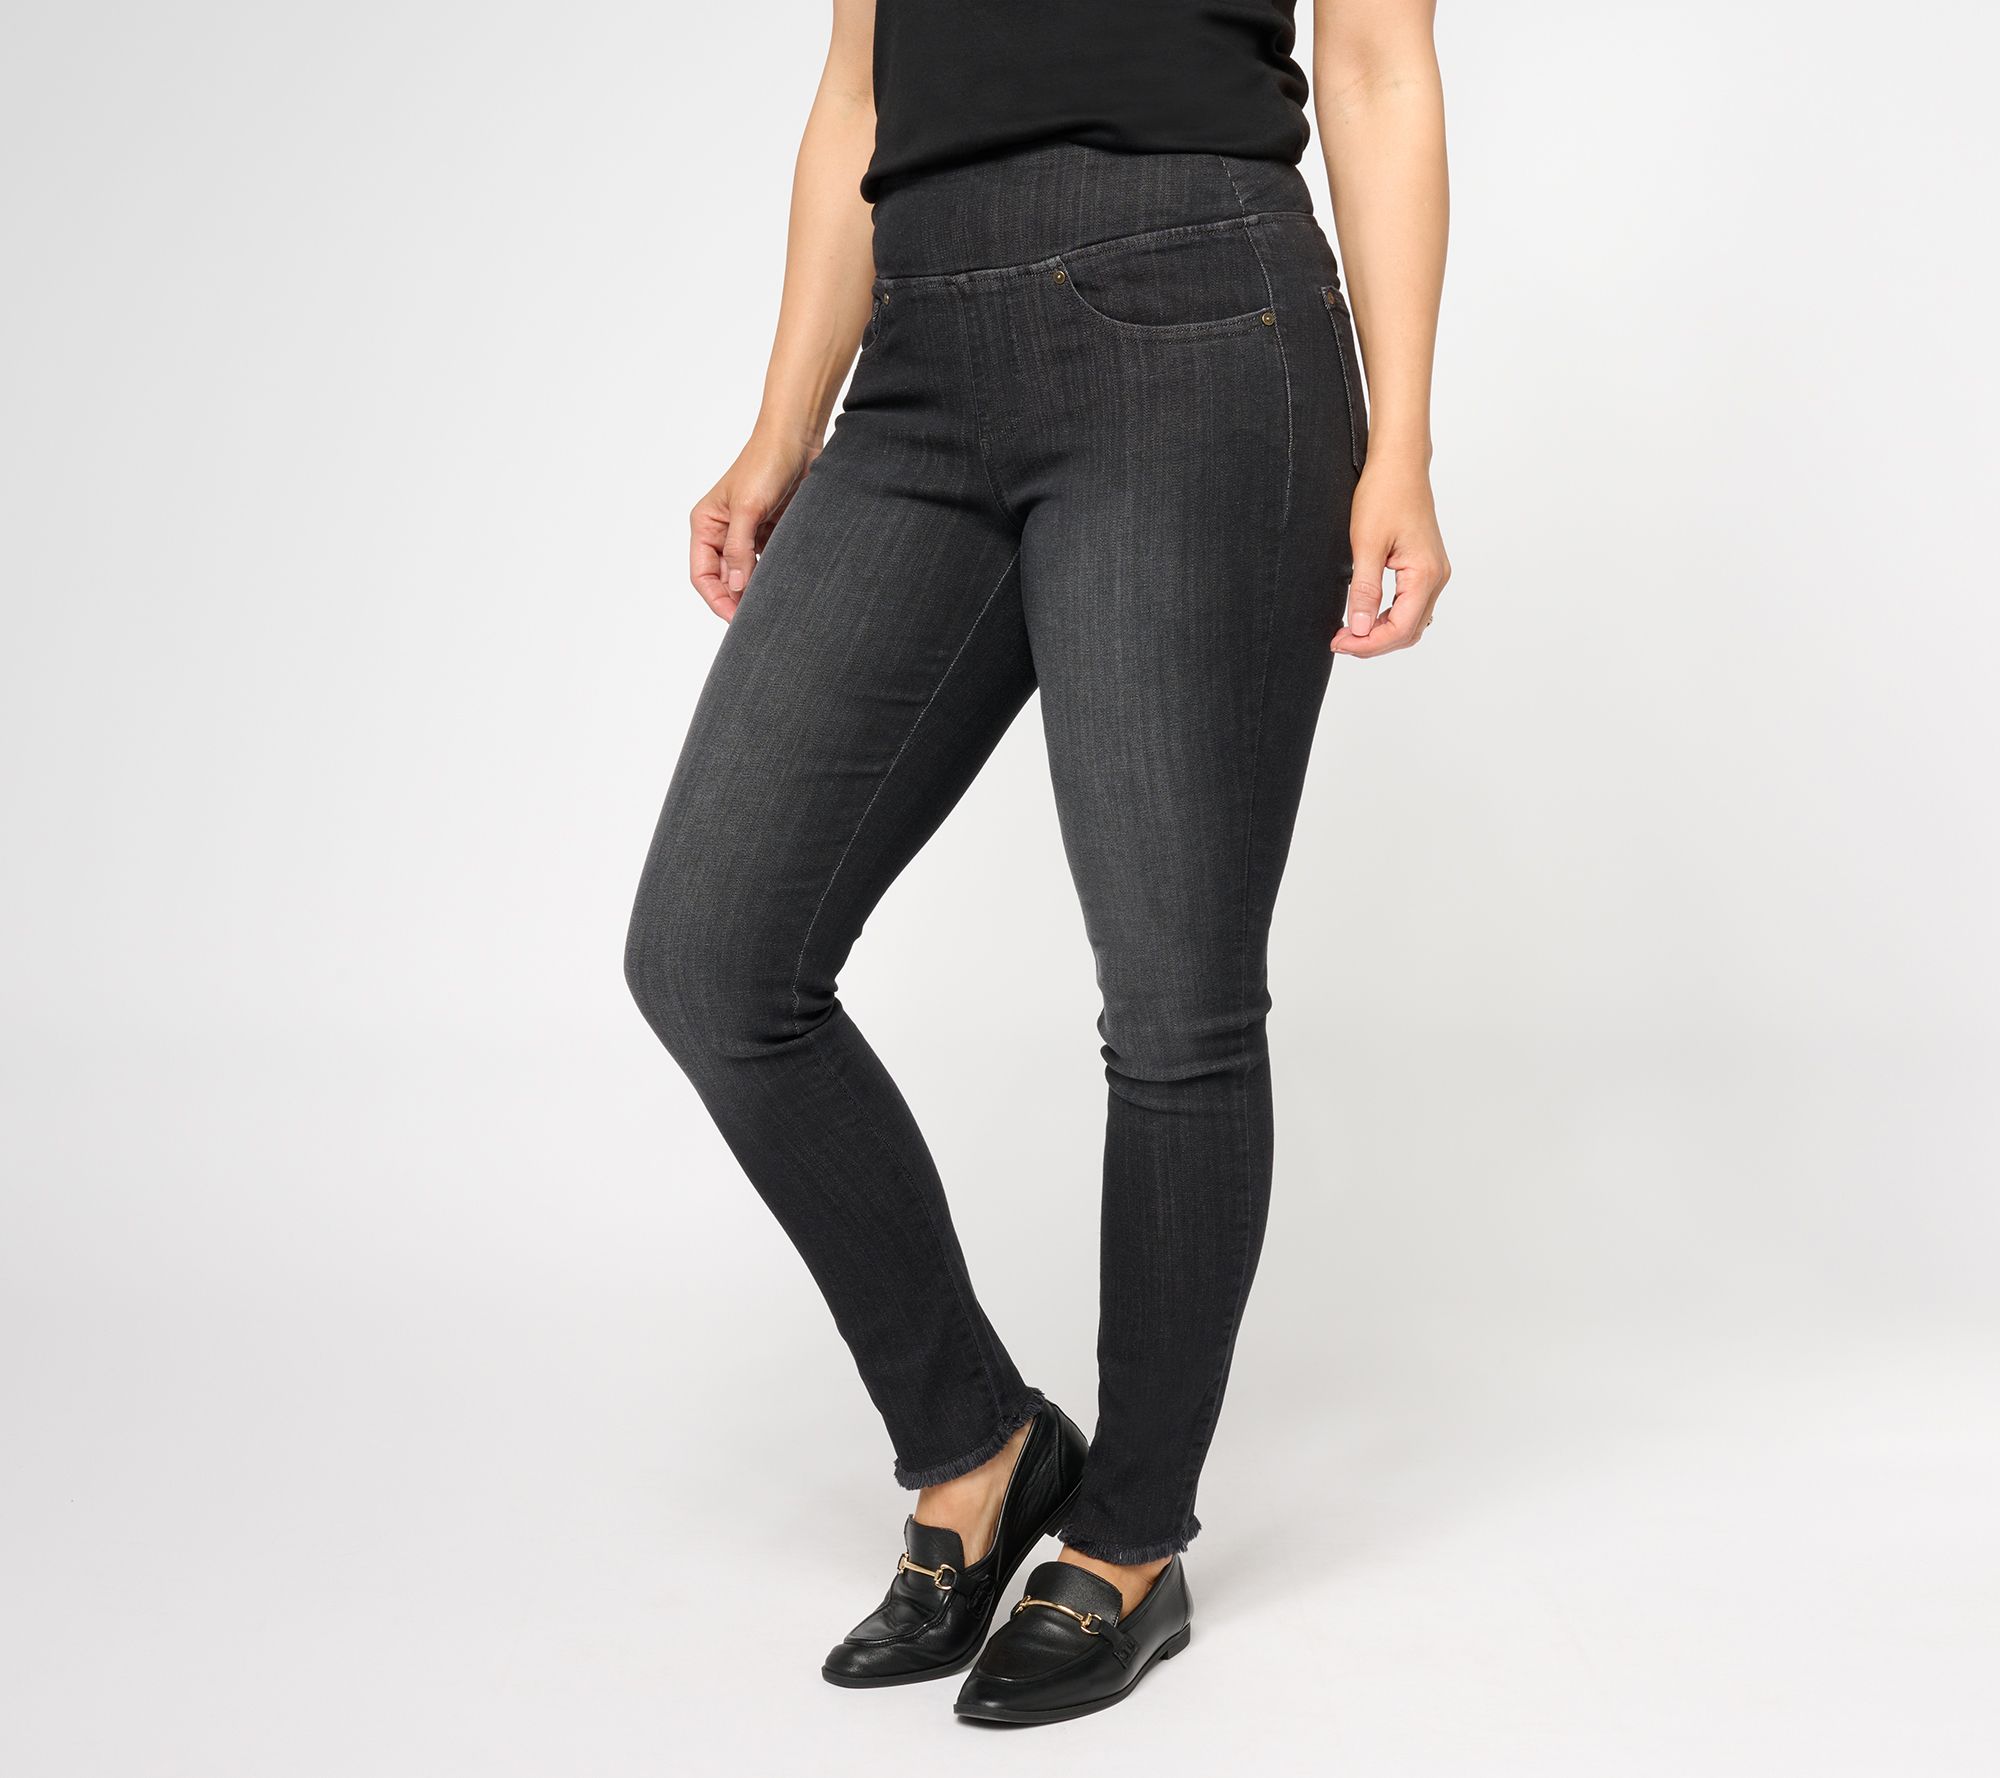 Women's Tall Jeggings Jeans